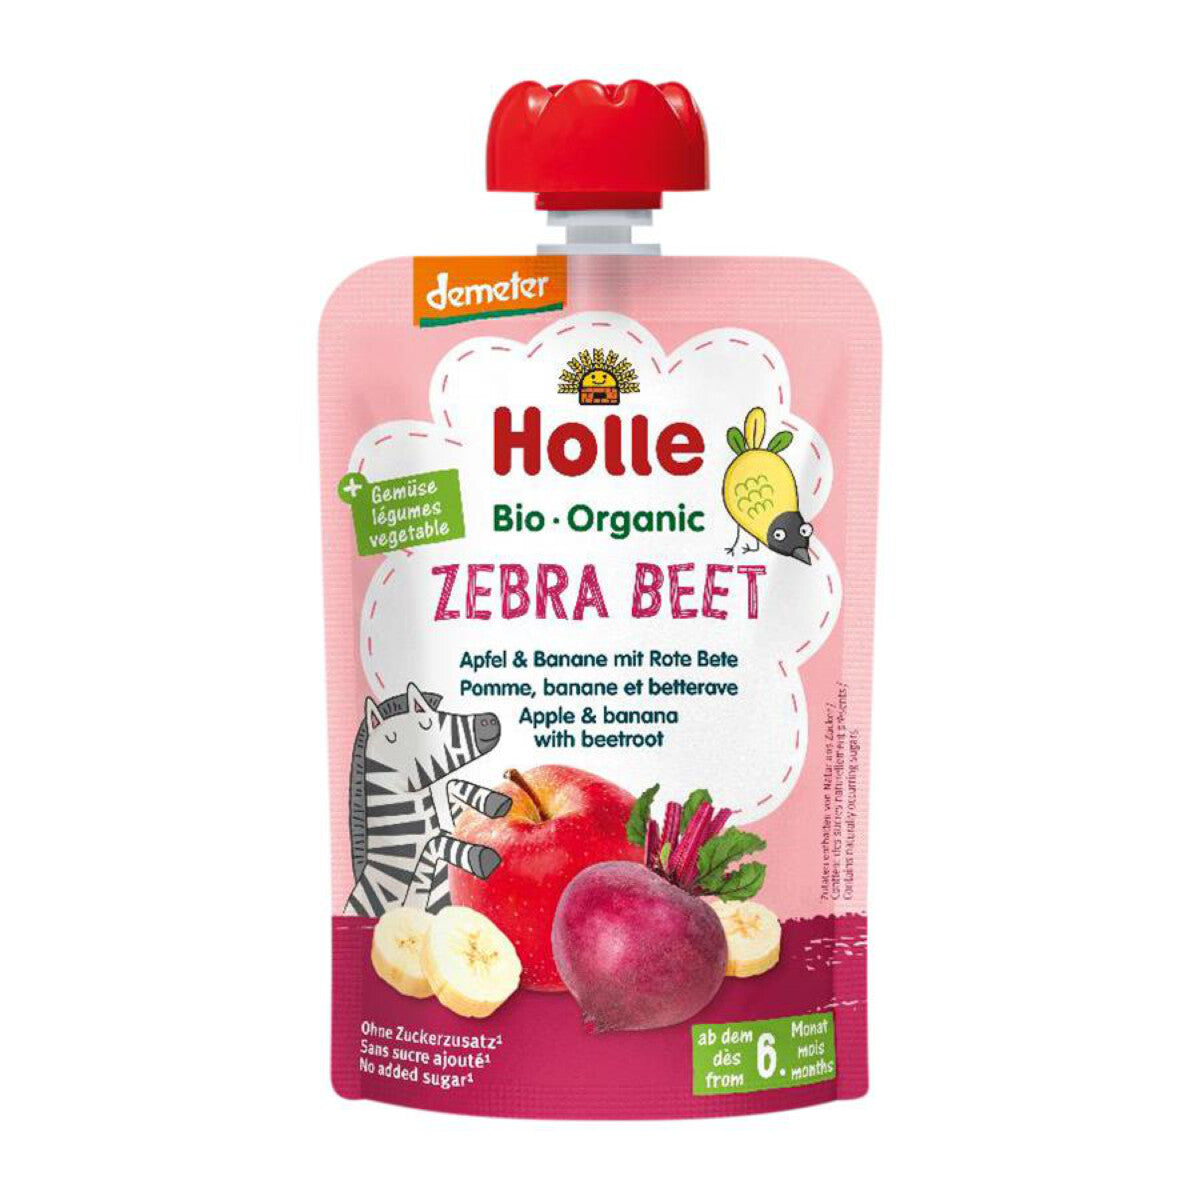 HOLLE Zebra Beet - 100 g